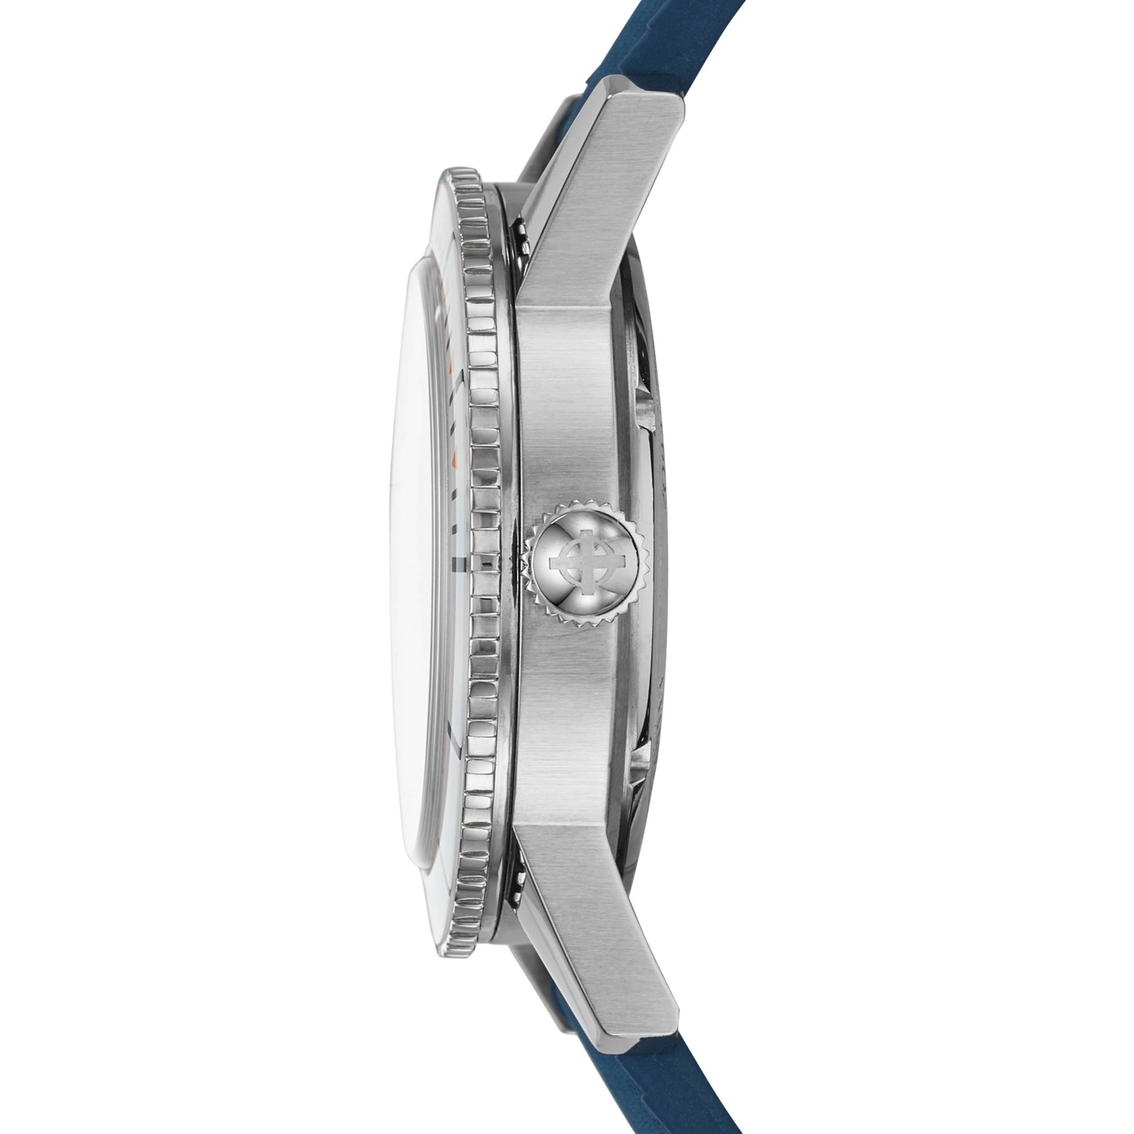 Zodiac Men's Super Sea Wolf Automatic Blue Rubber Watch ZO9270 - Image 3 of 3